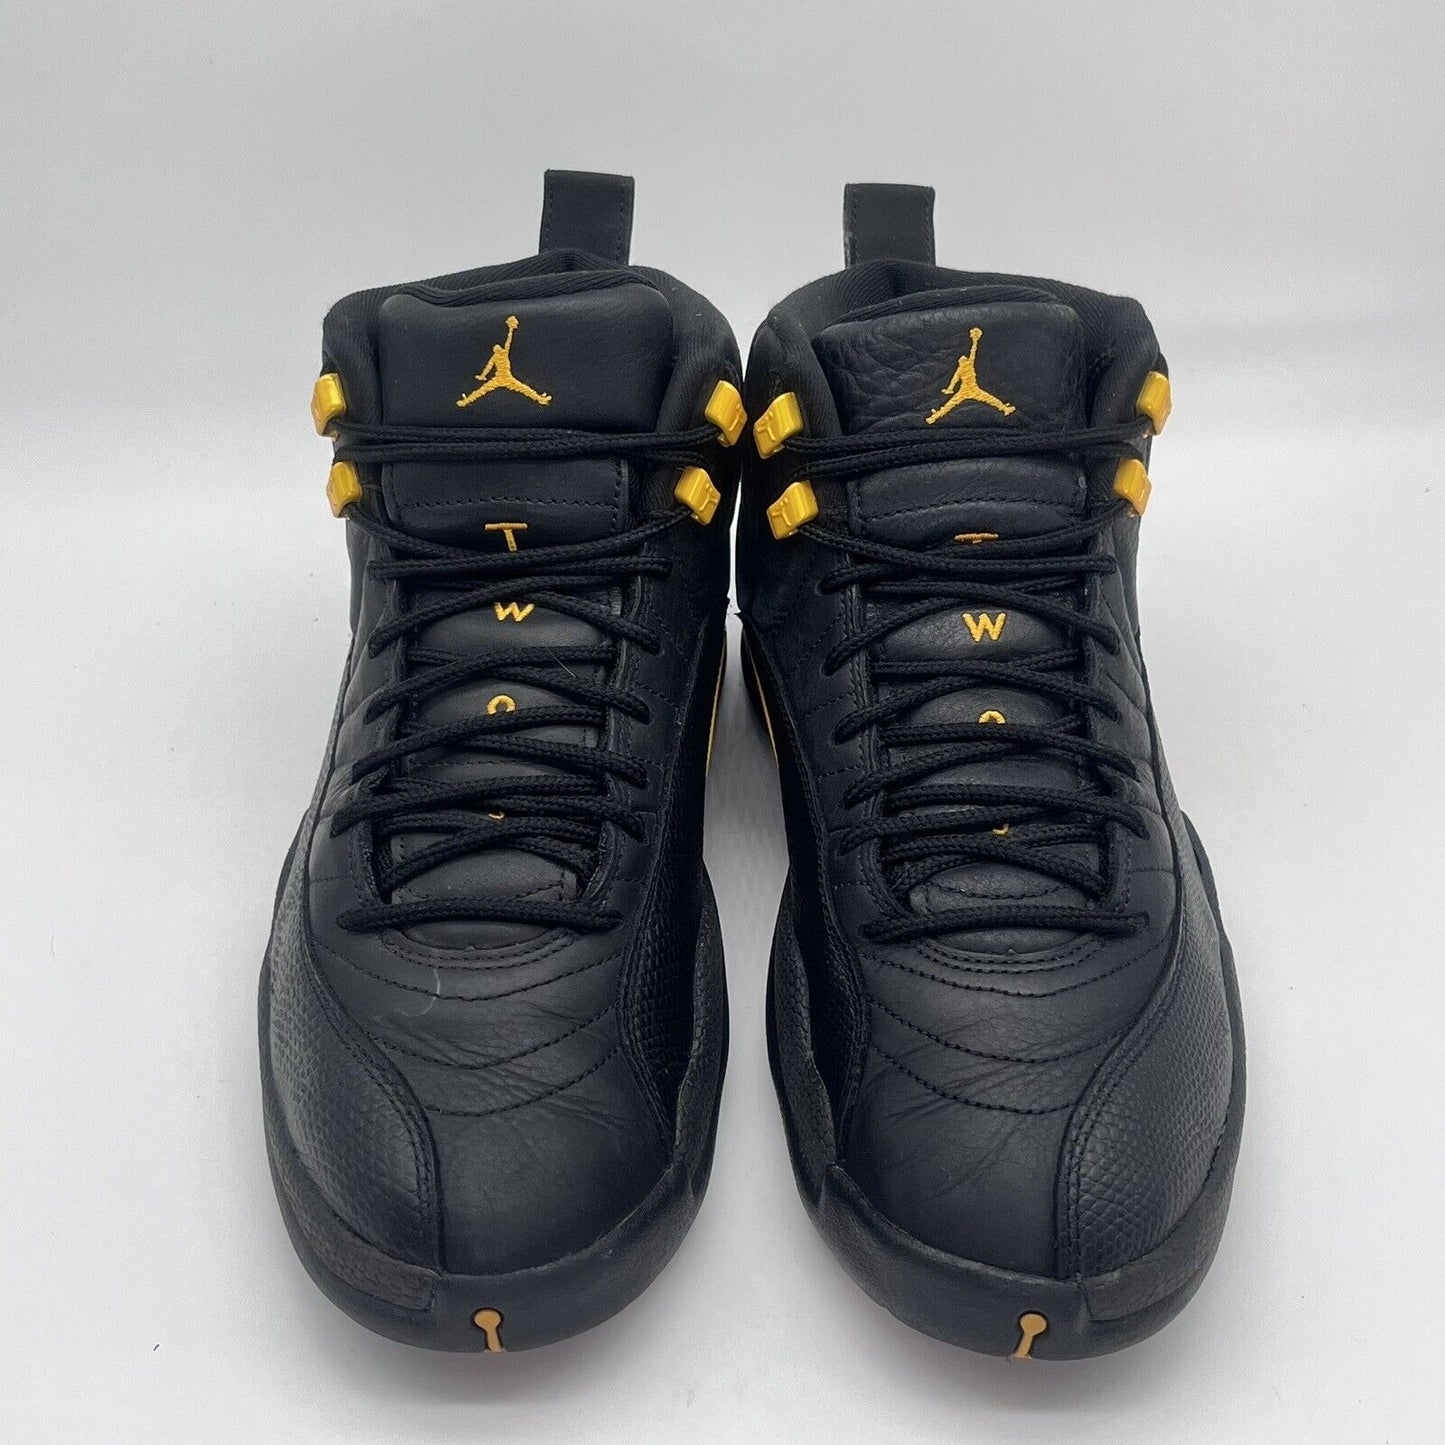 Size 10.5 - Jordan 12 Black Taxi CT8013-071 OG XII Retro Men’s Sneakers